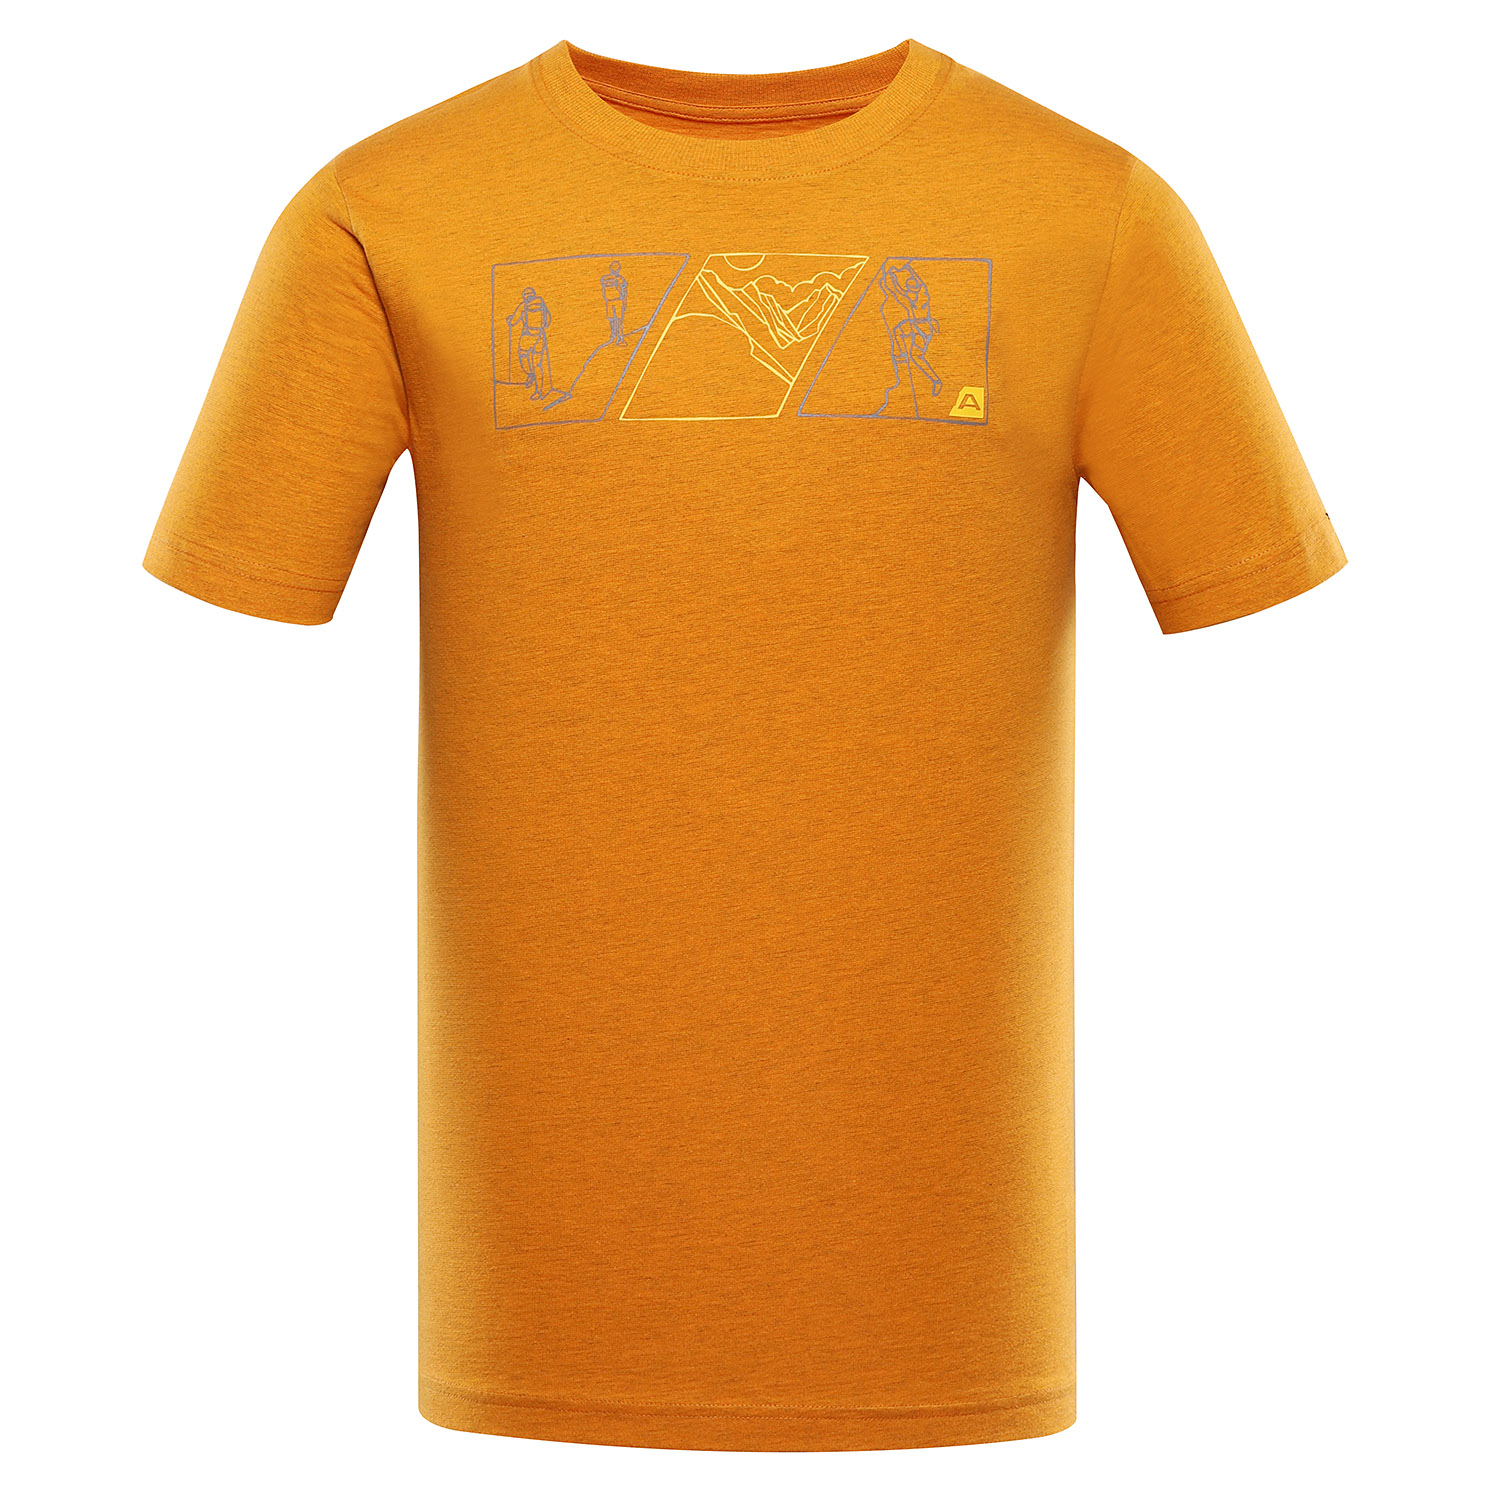 Men's cotton T-shirt ALPINE PRO GORAF russet orange variant pb